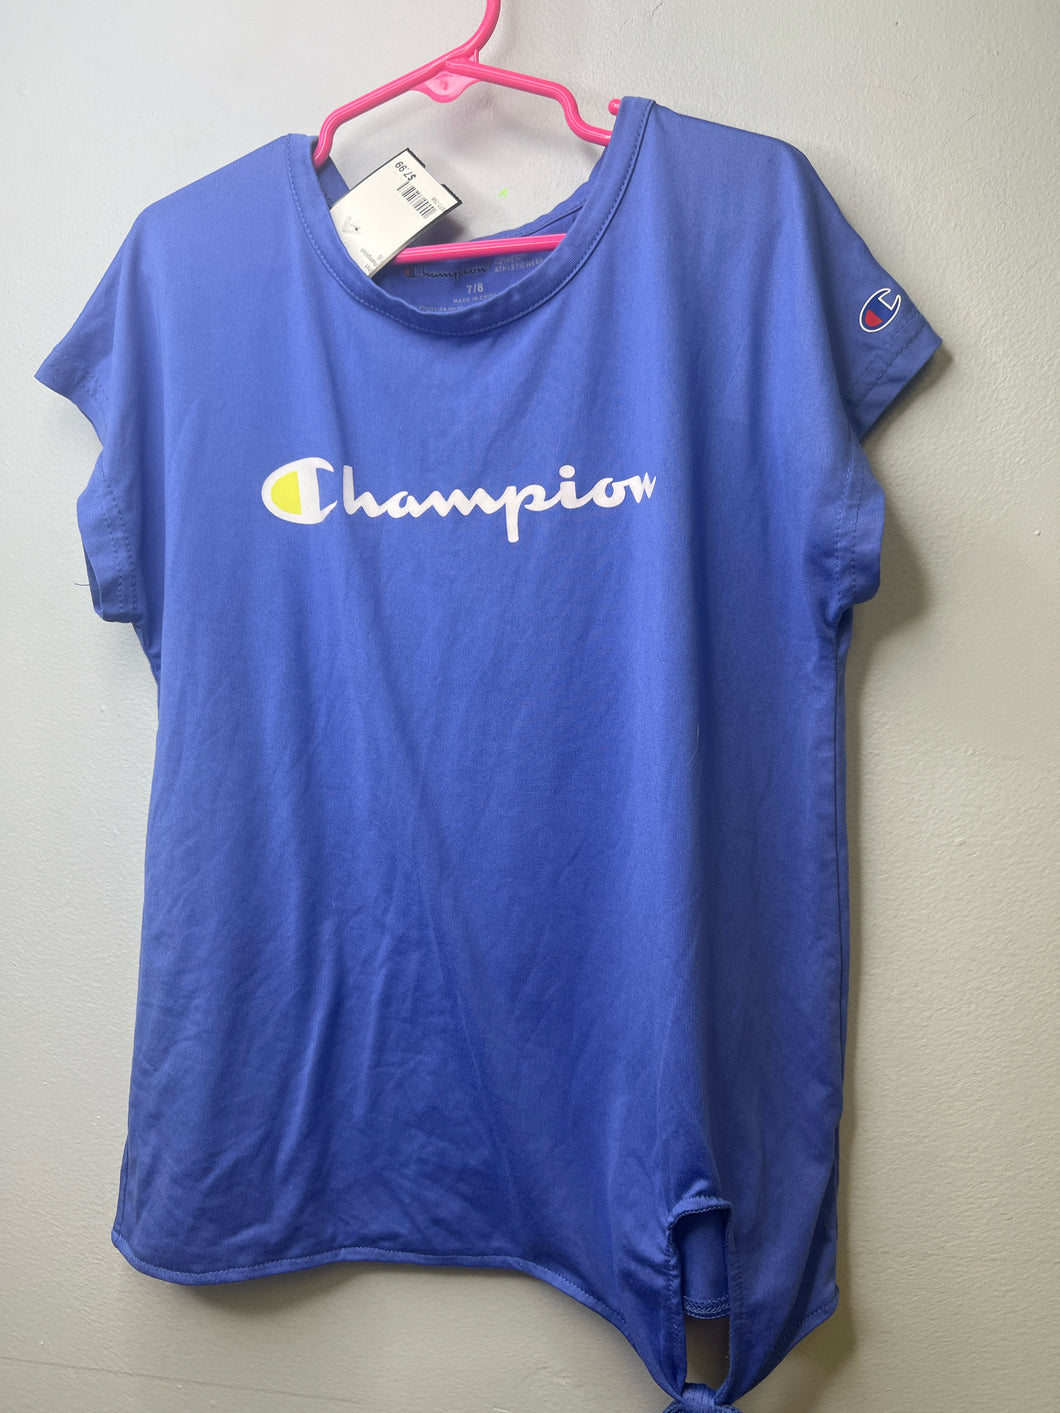 Girls 7/8 champion Shirt